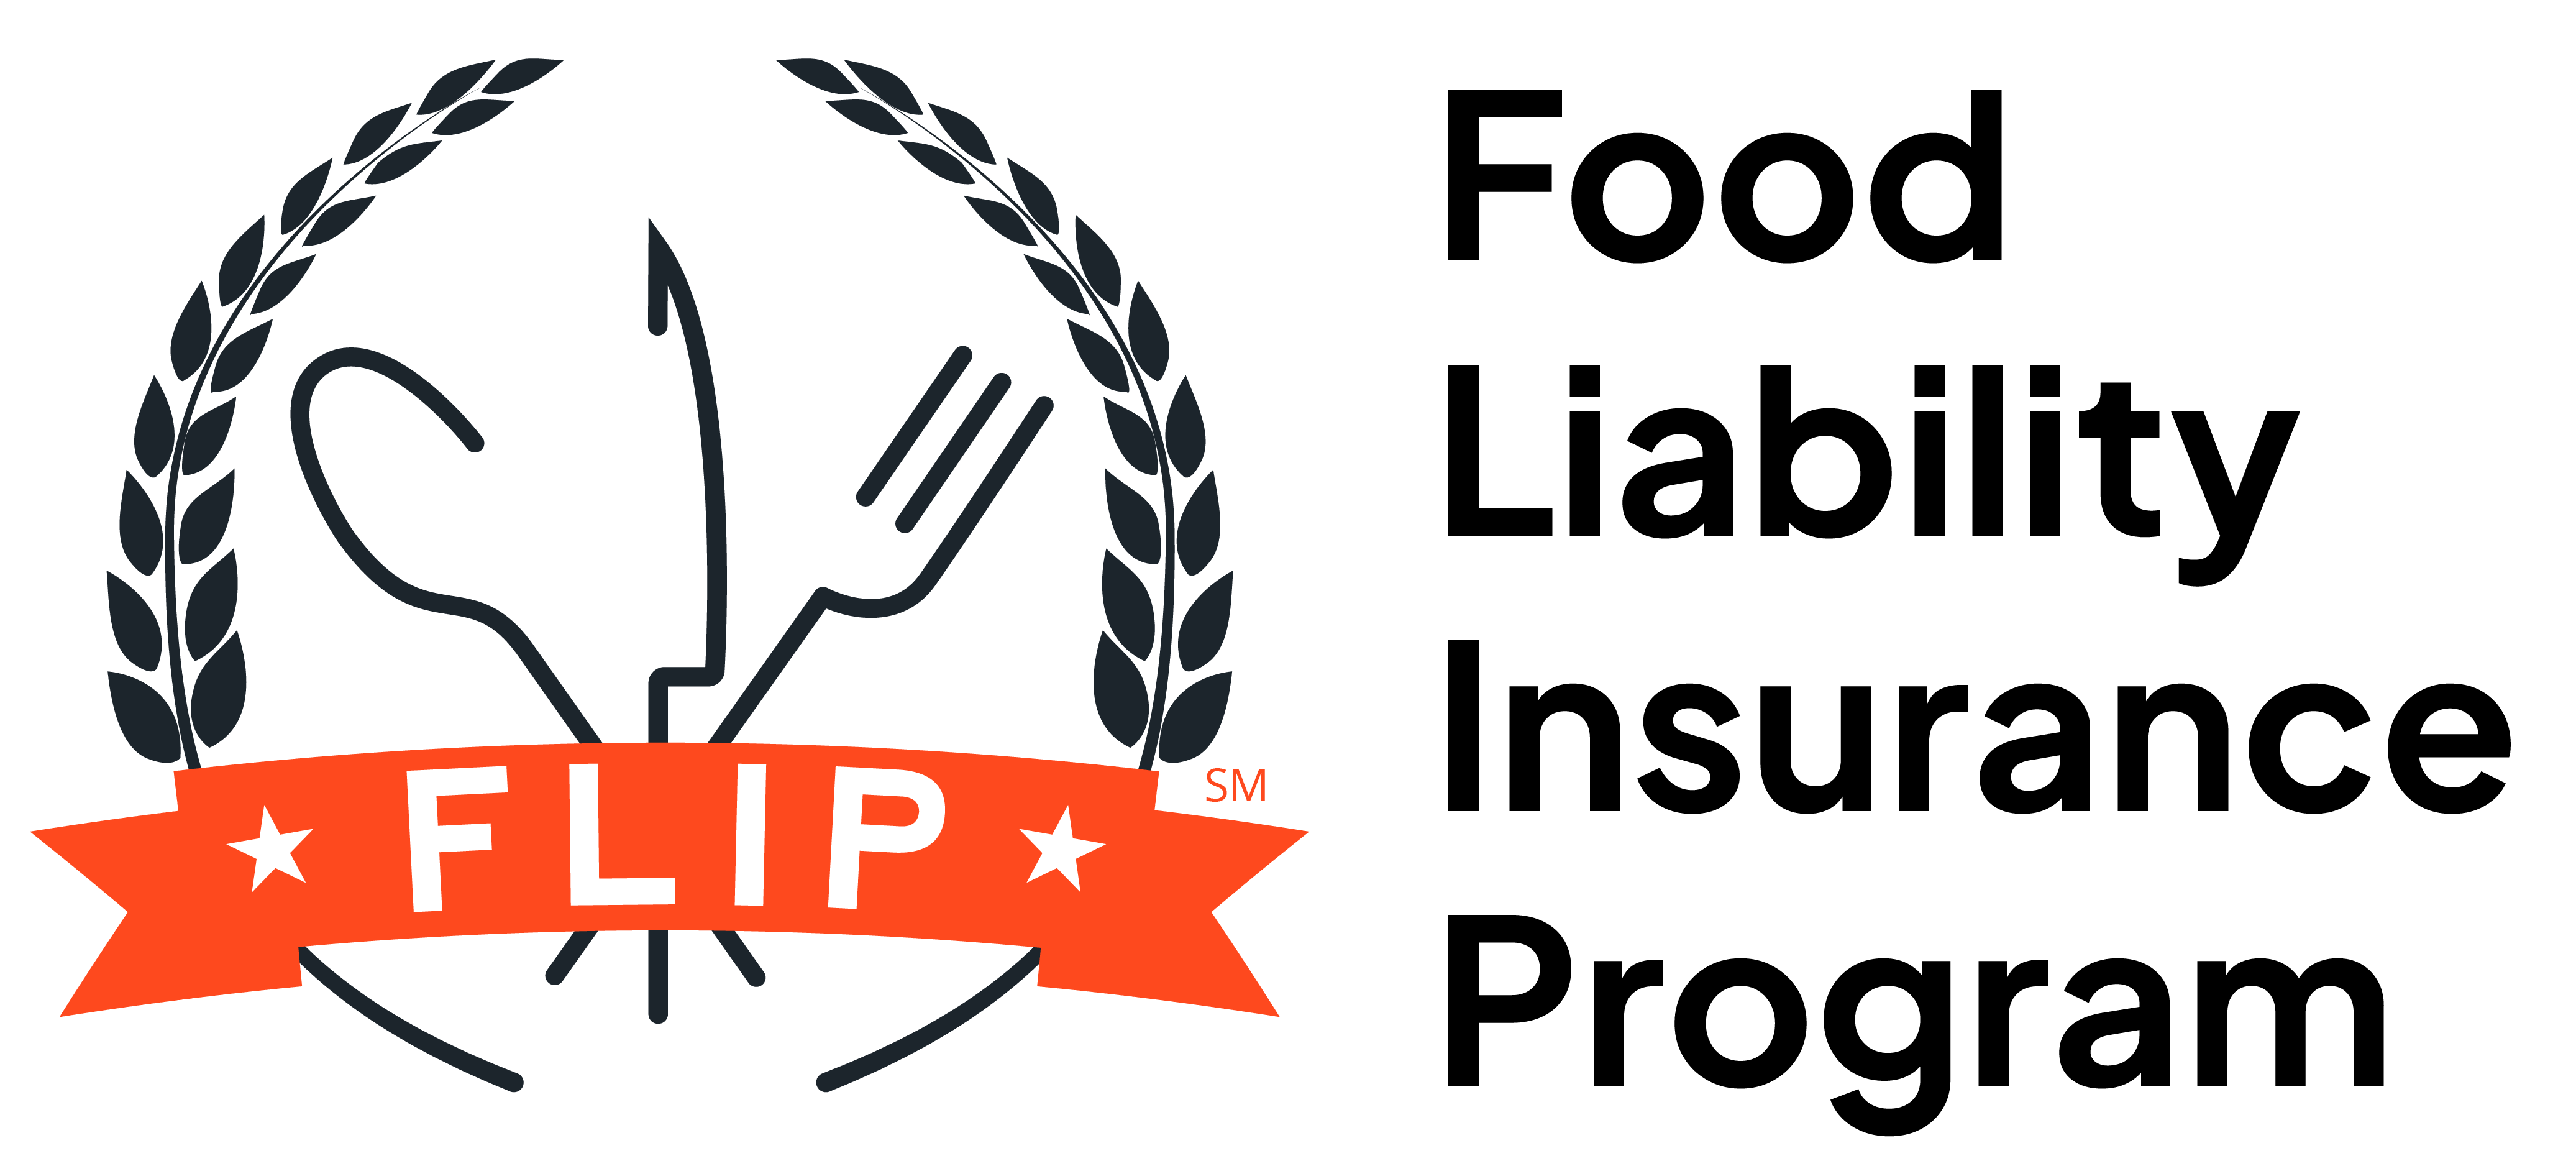 FLIP Food Insurance Program